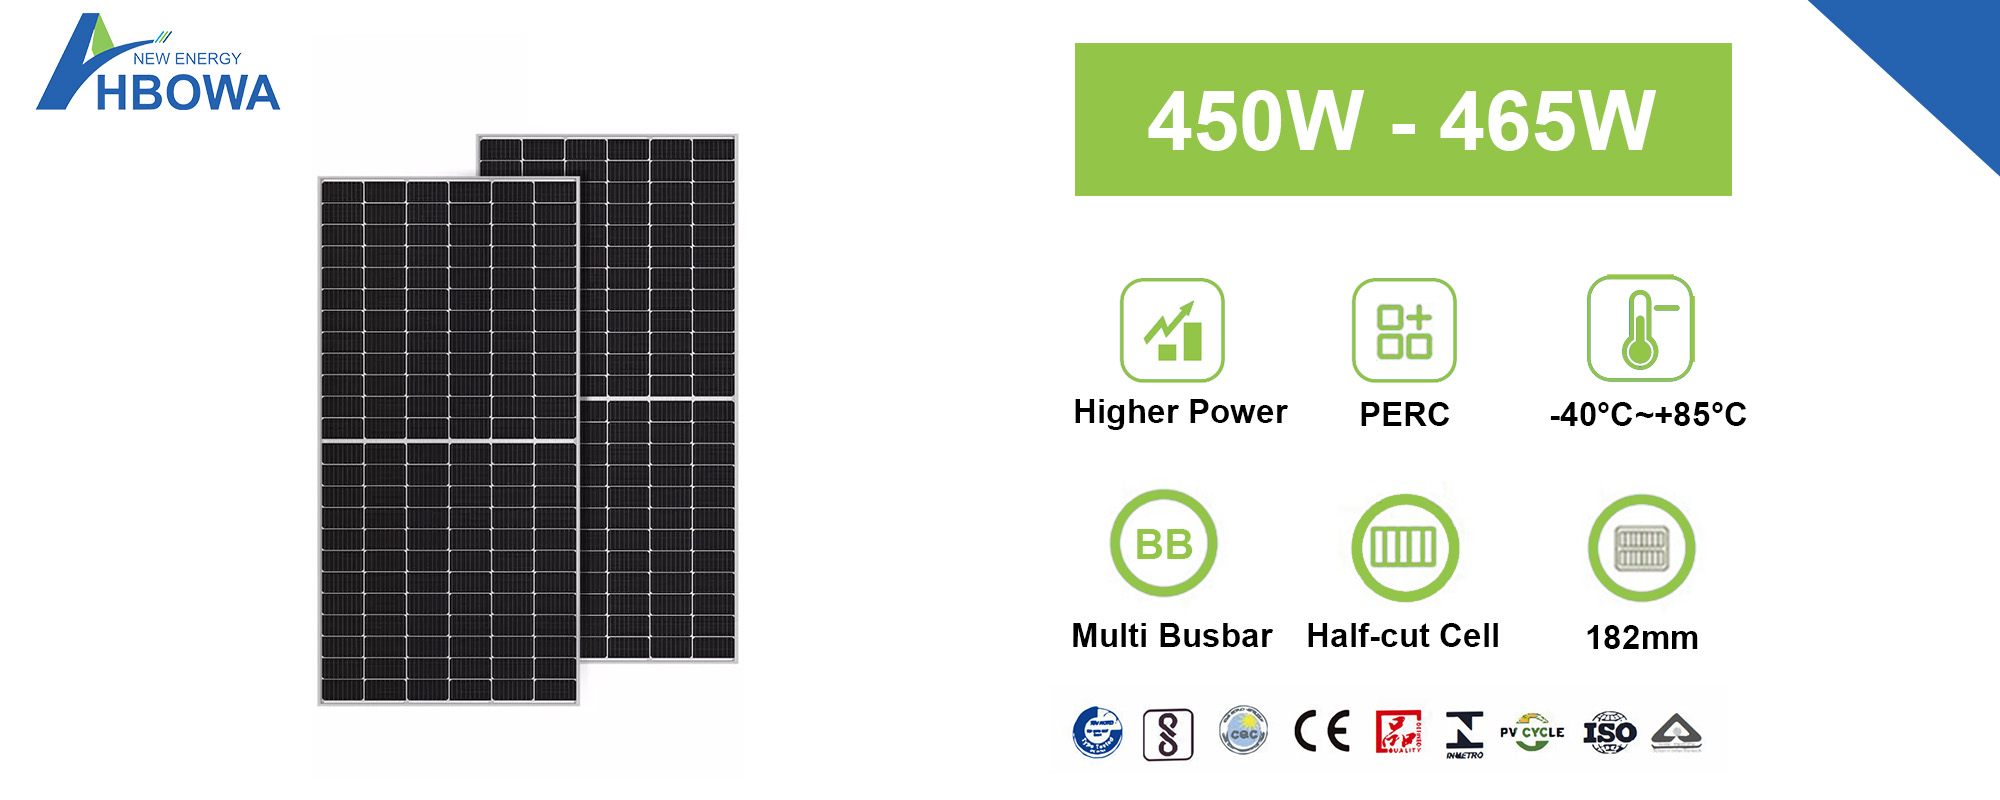 450-465W perc mono solar panel features - hbowa